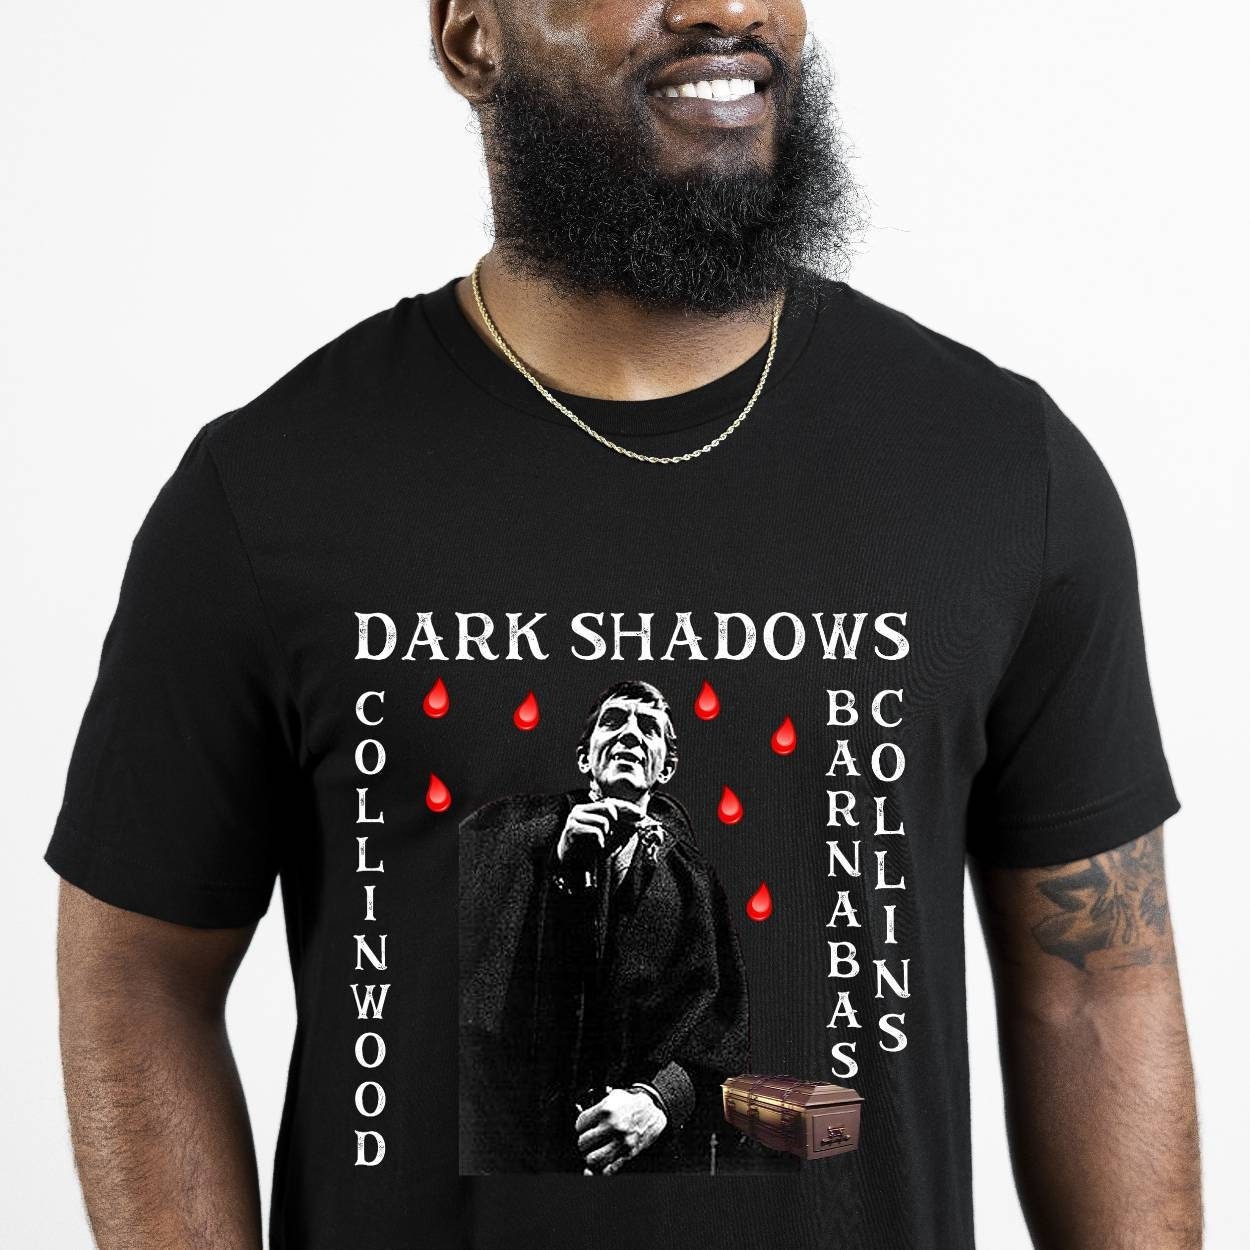 Dark Shadows Shirt, Gifts For Men sold by ChaAnderson | SKU 38615386 ...